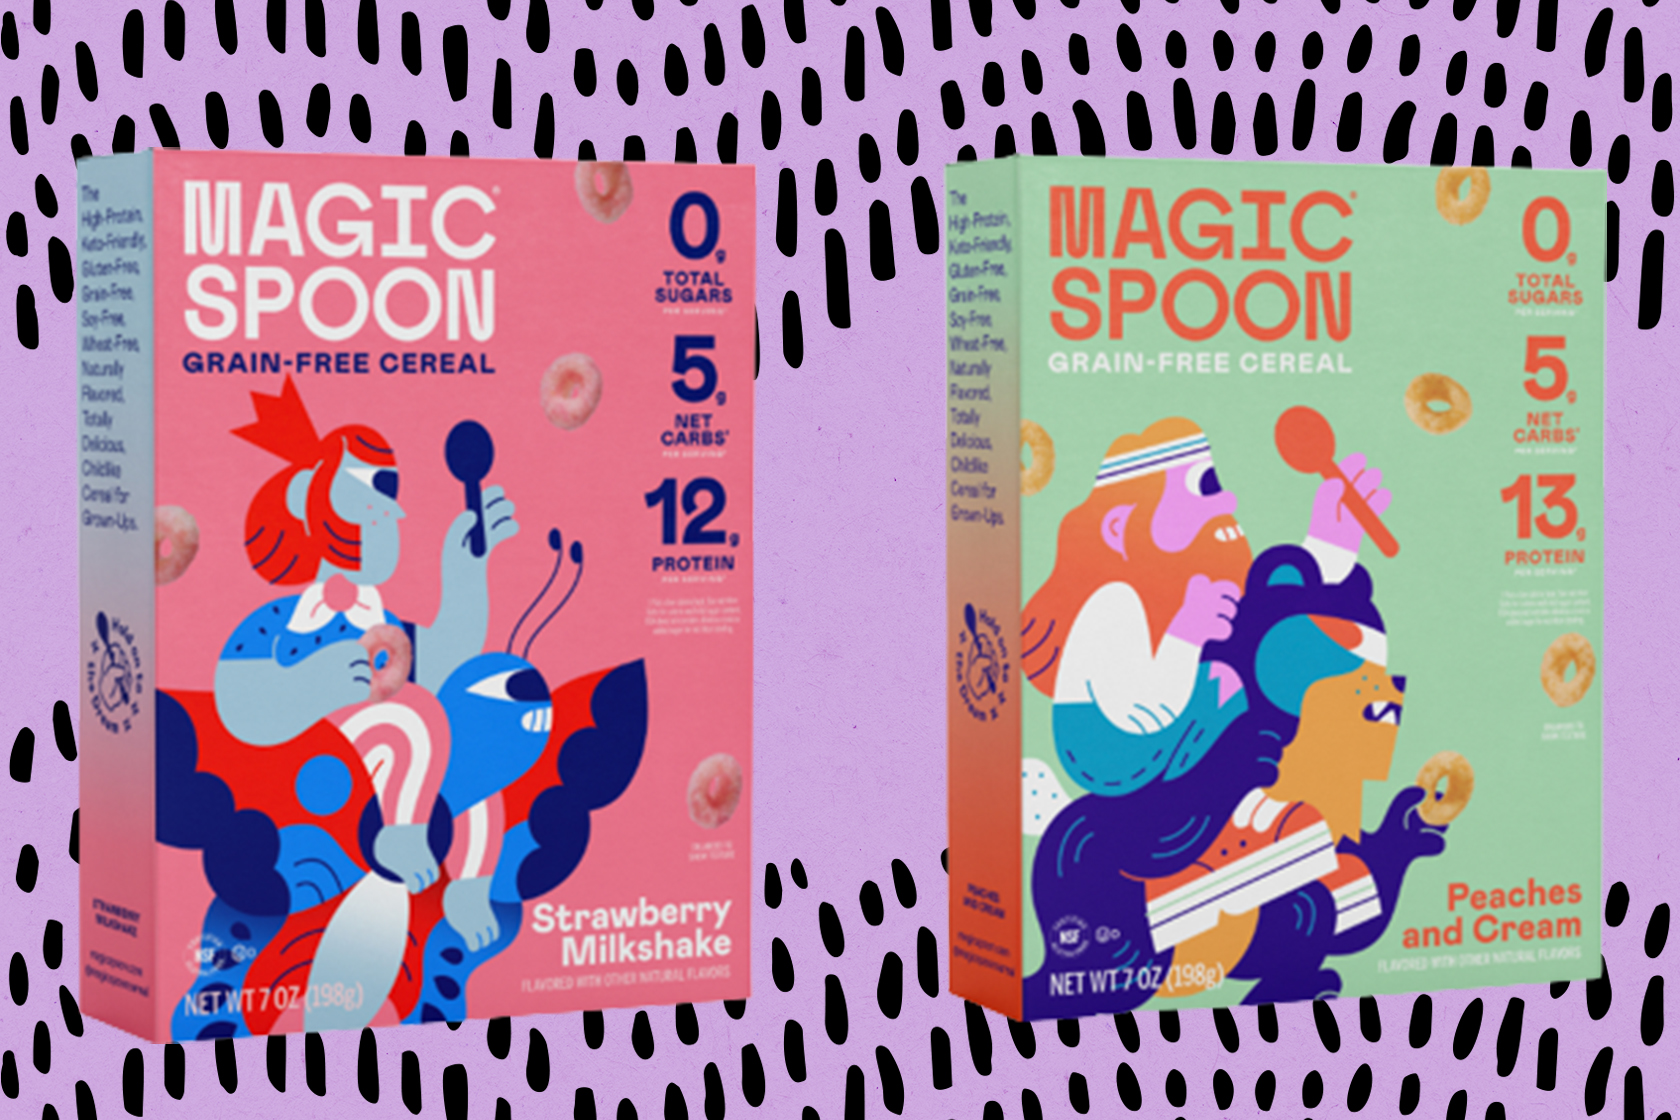 magic-spoon-is-releasing-2-new-fun-flavors